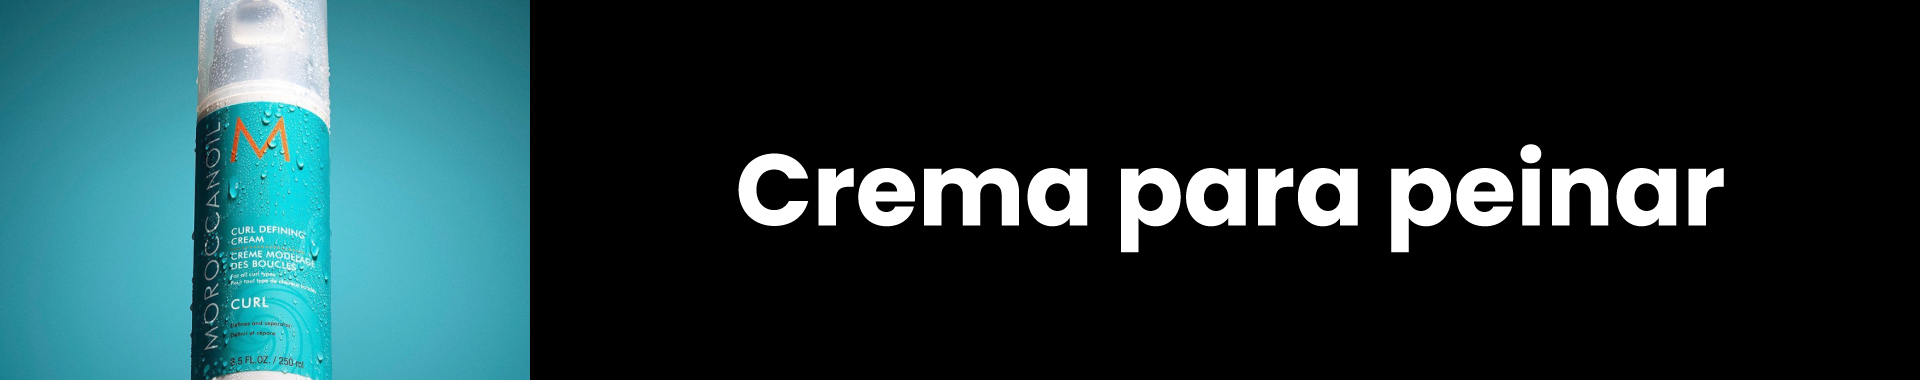 Banner crema